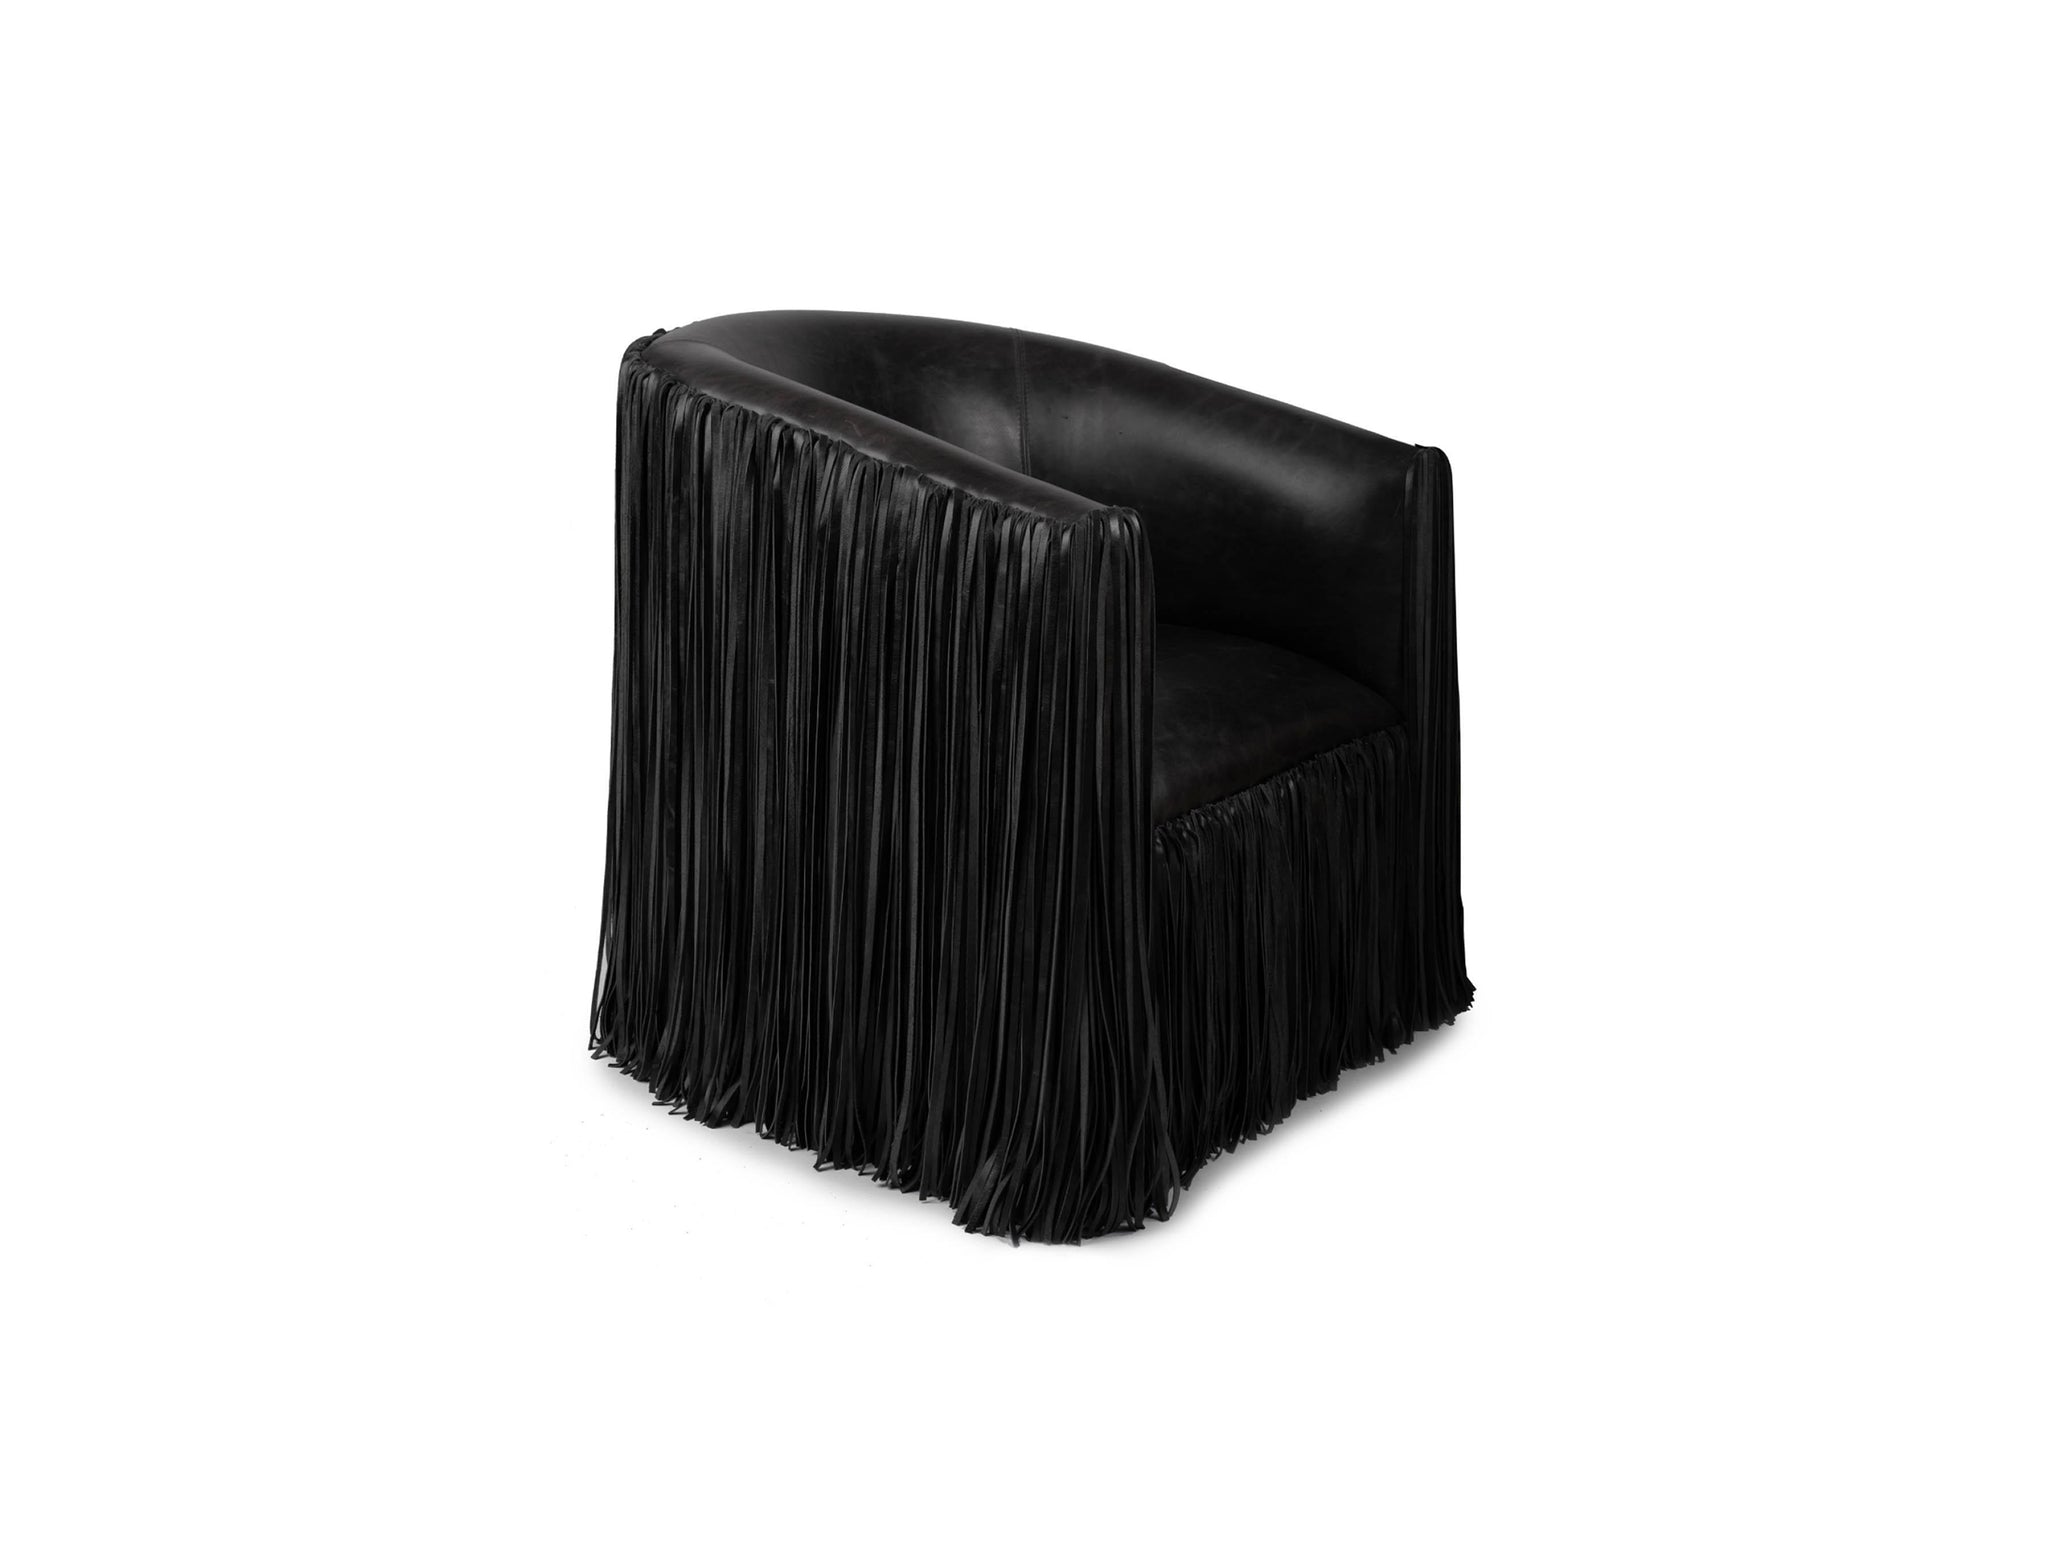 Shaggy Leather Swivel Chair